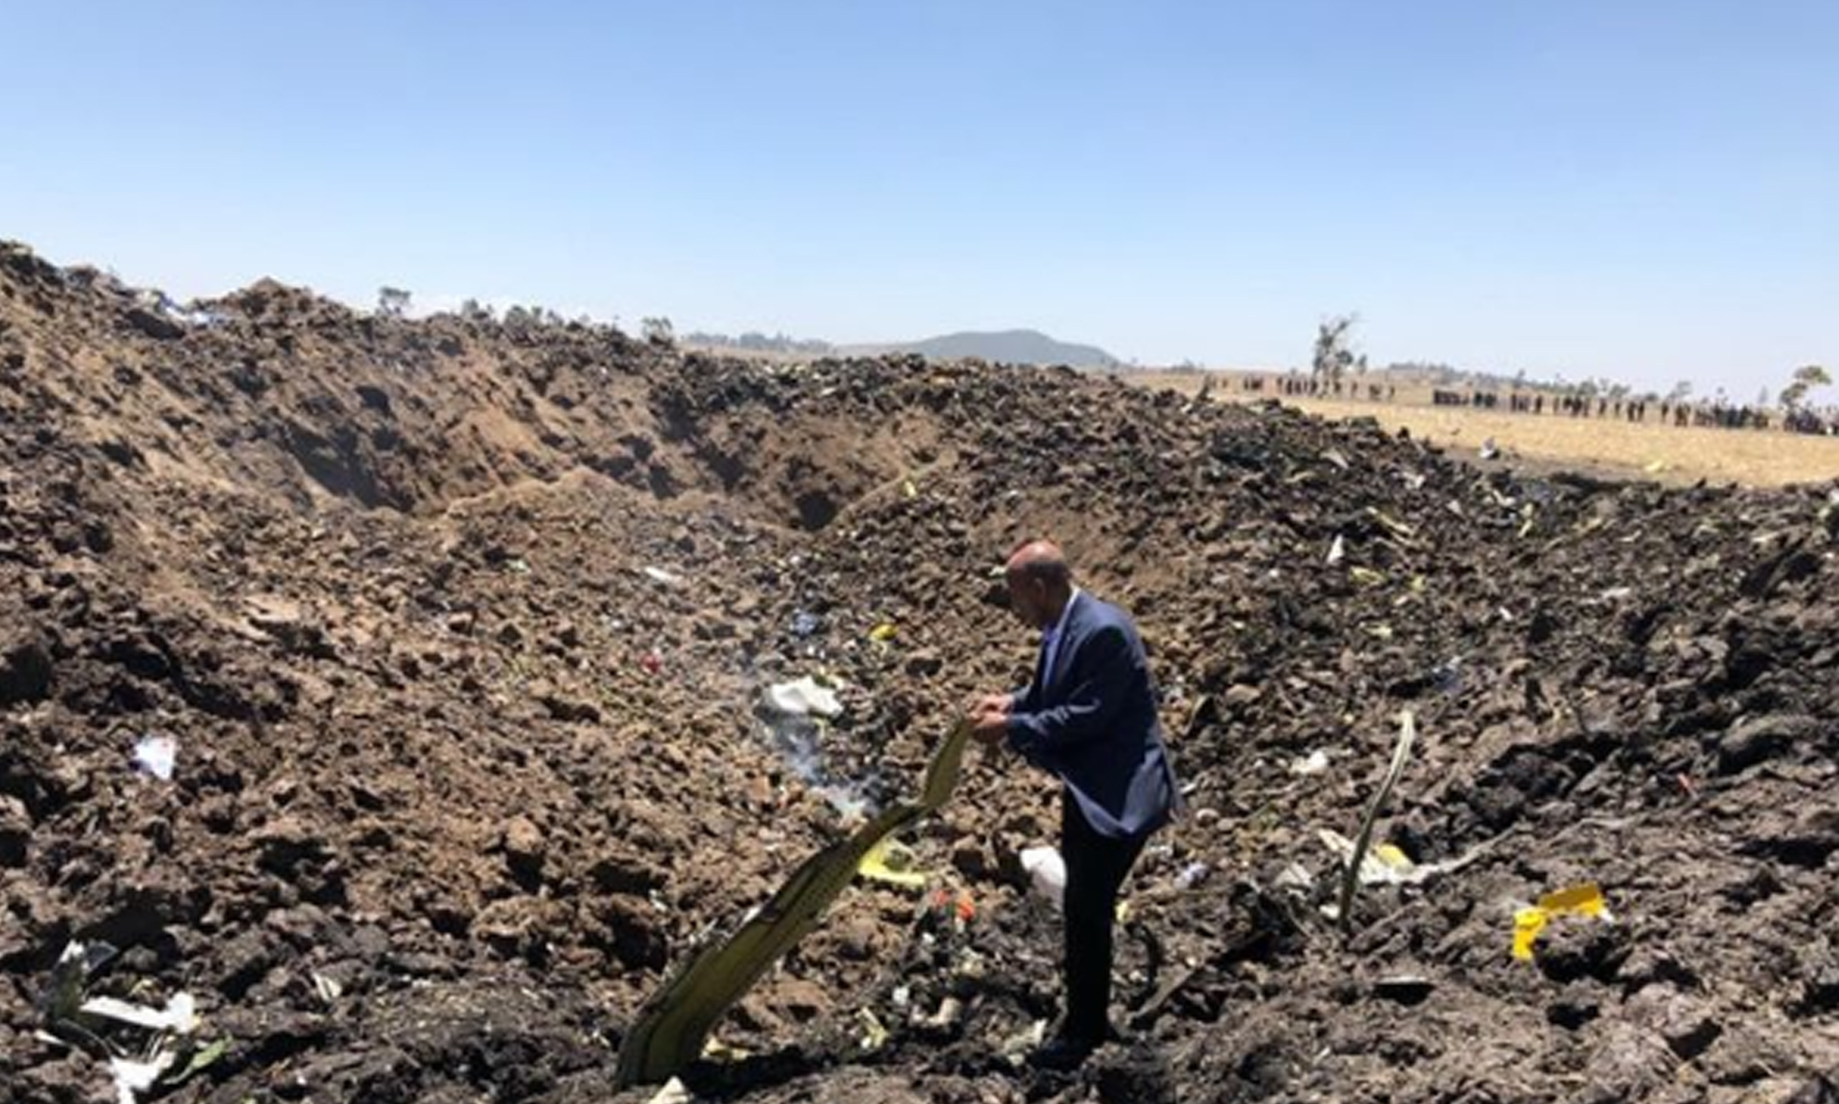 Ethiopian Airlines plane crash: No survivors among 157 on board